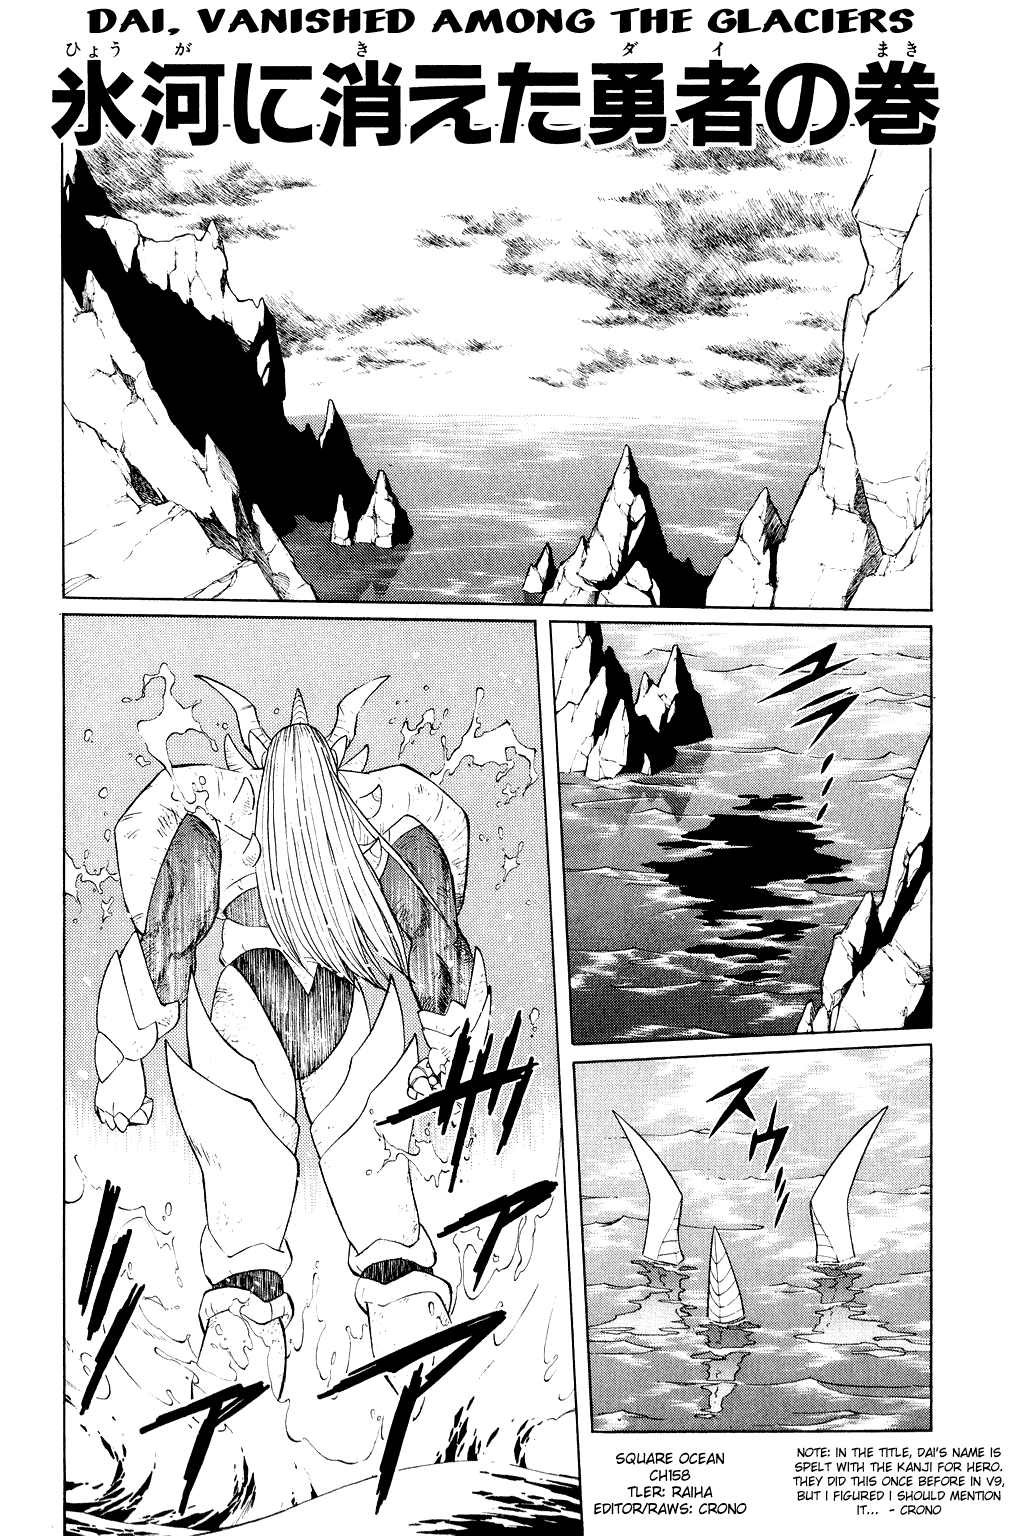 One Punch-Man Capítulo 158 - Manga Online